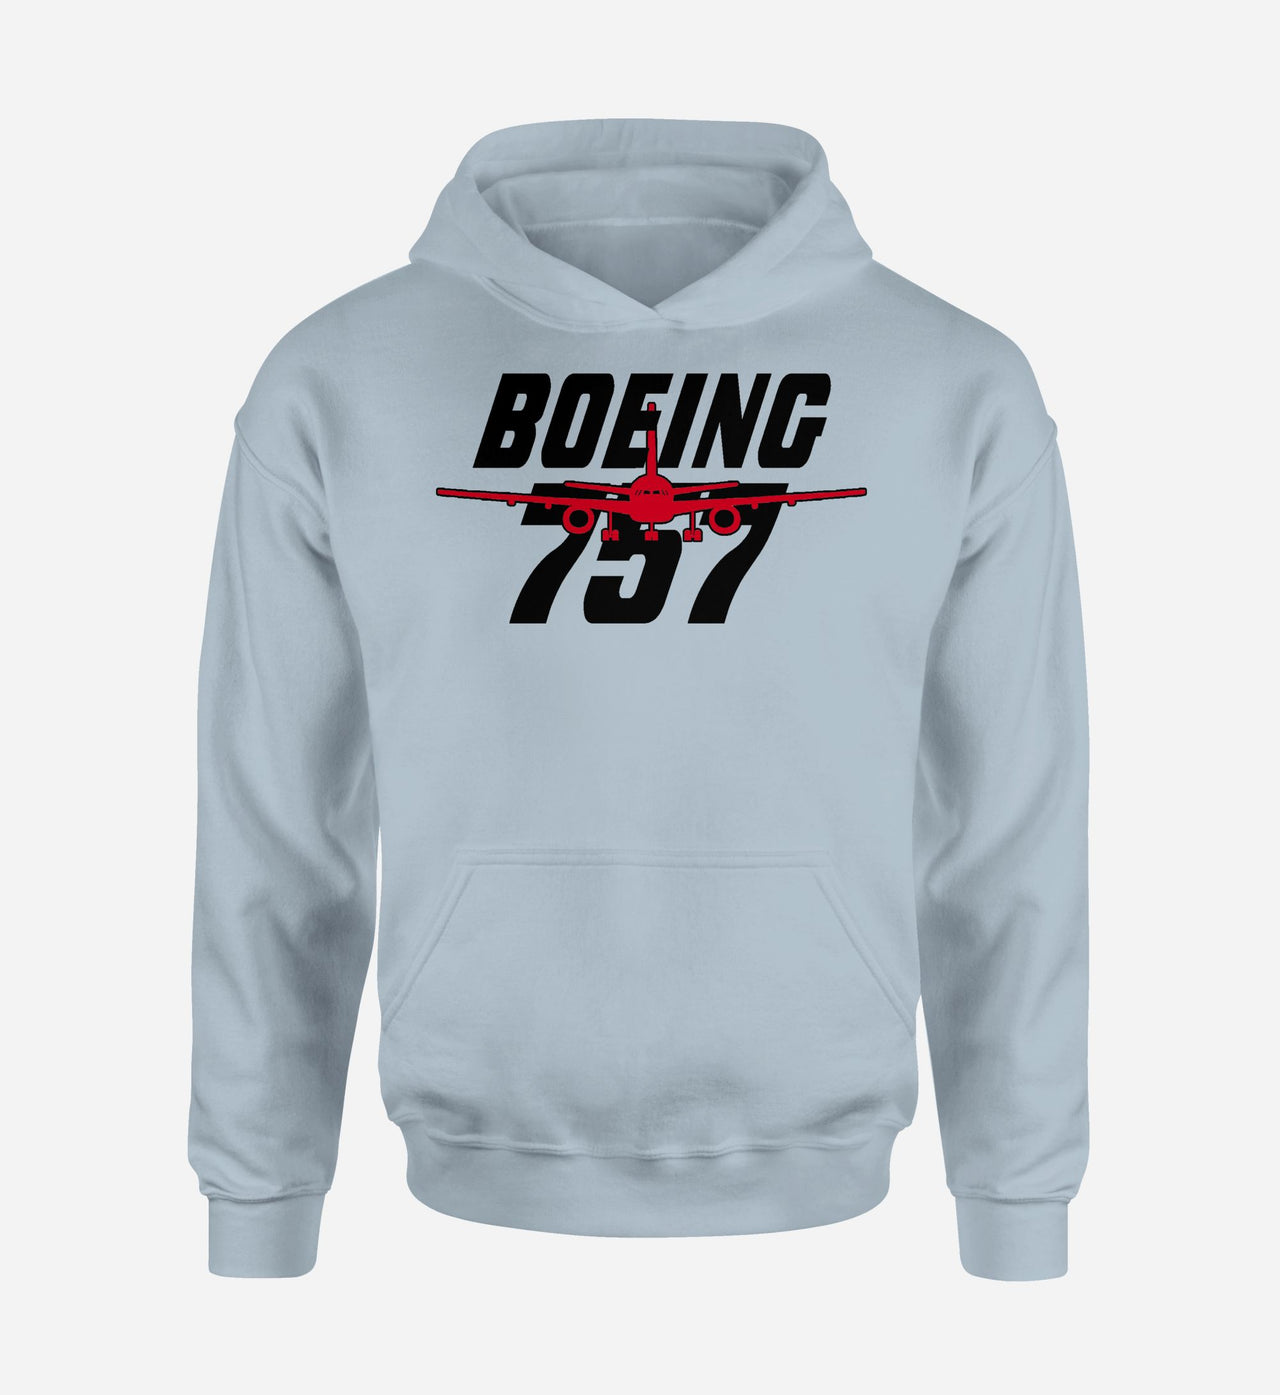 Amazing Boeing 757 Designed Hoodies